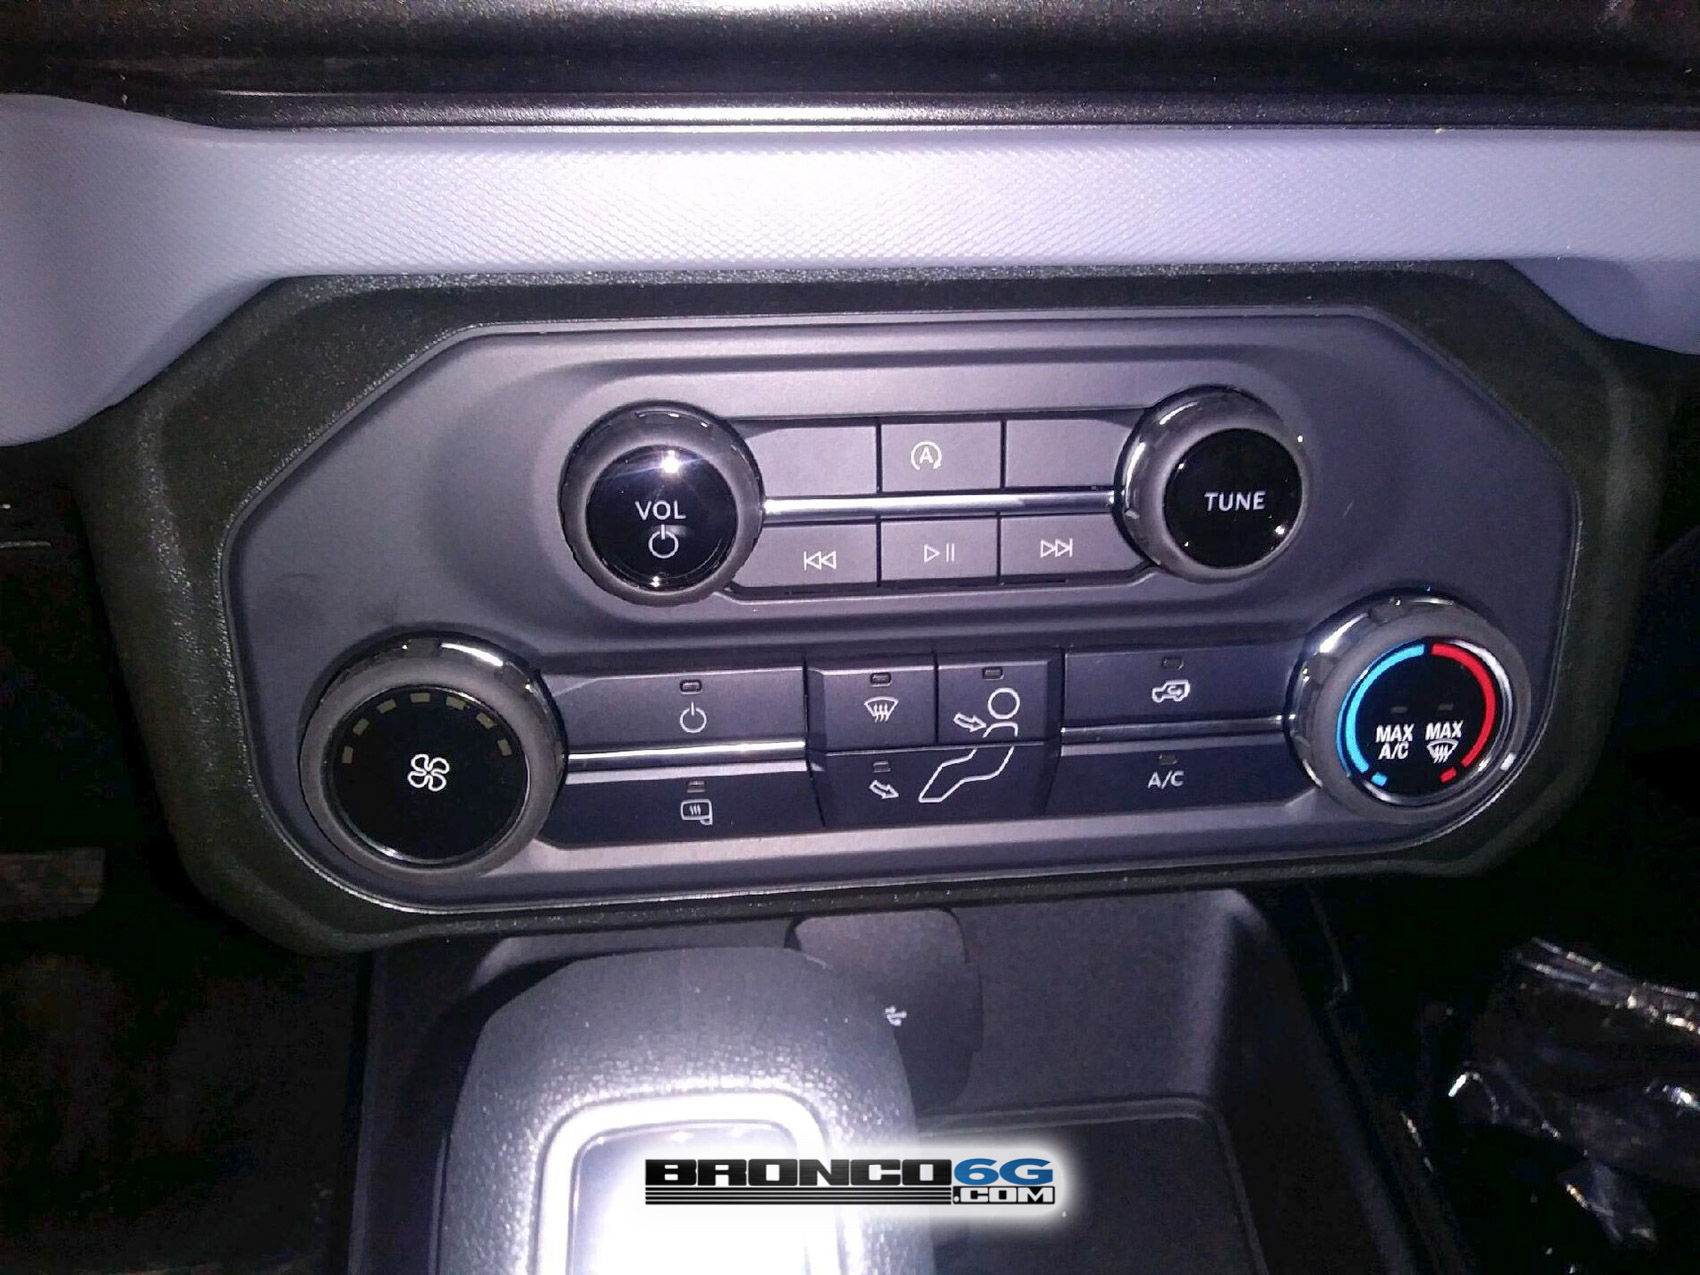 Factory 2021 Bronco interior buttons dashboard 1.jpg